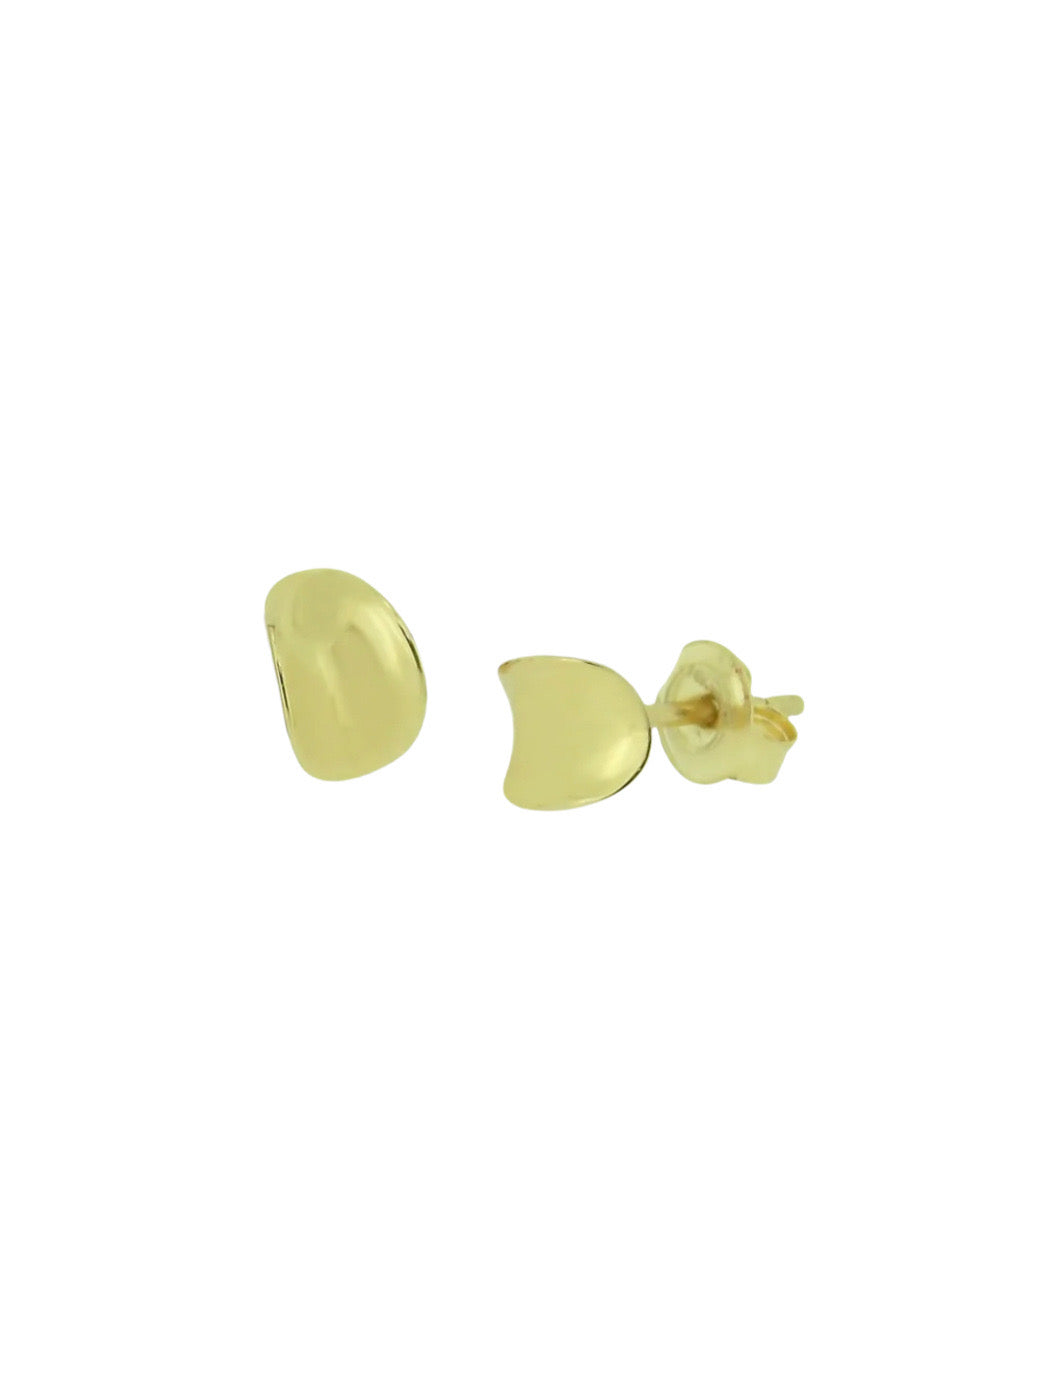 Pringle Yellow Gold Earrings